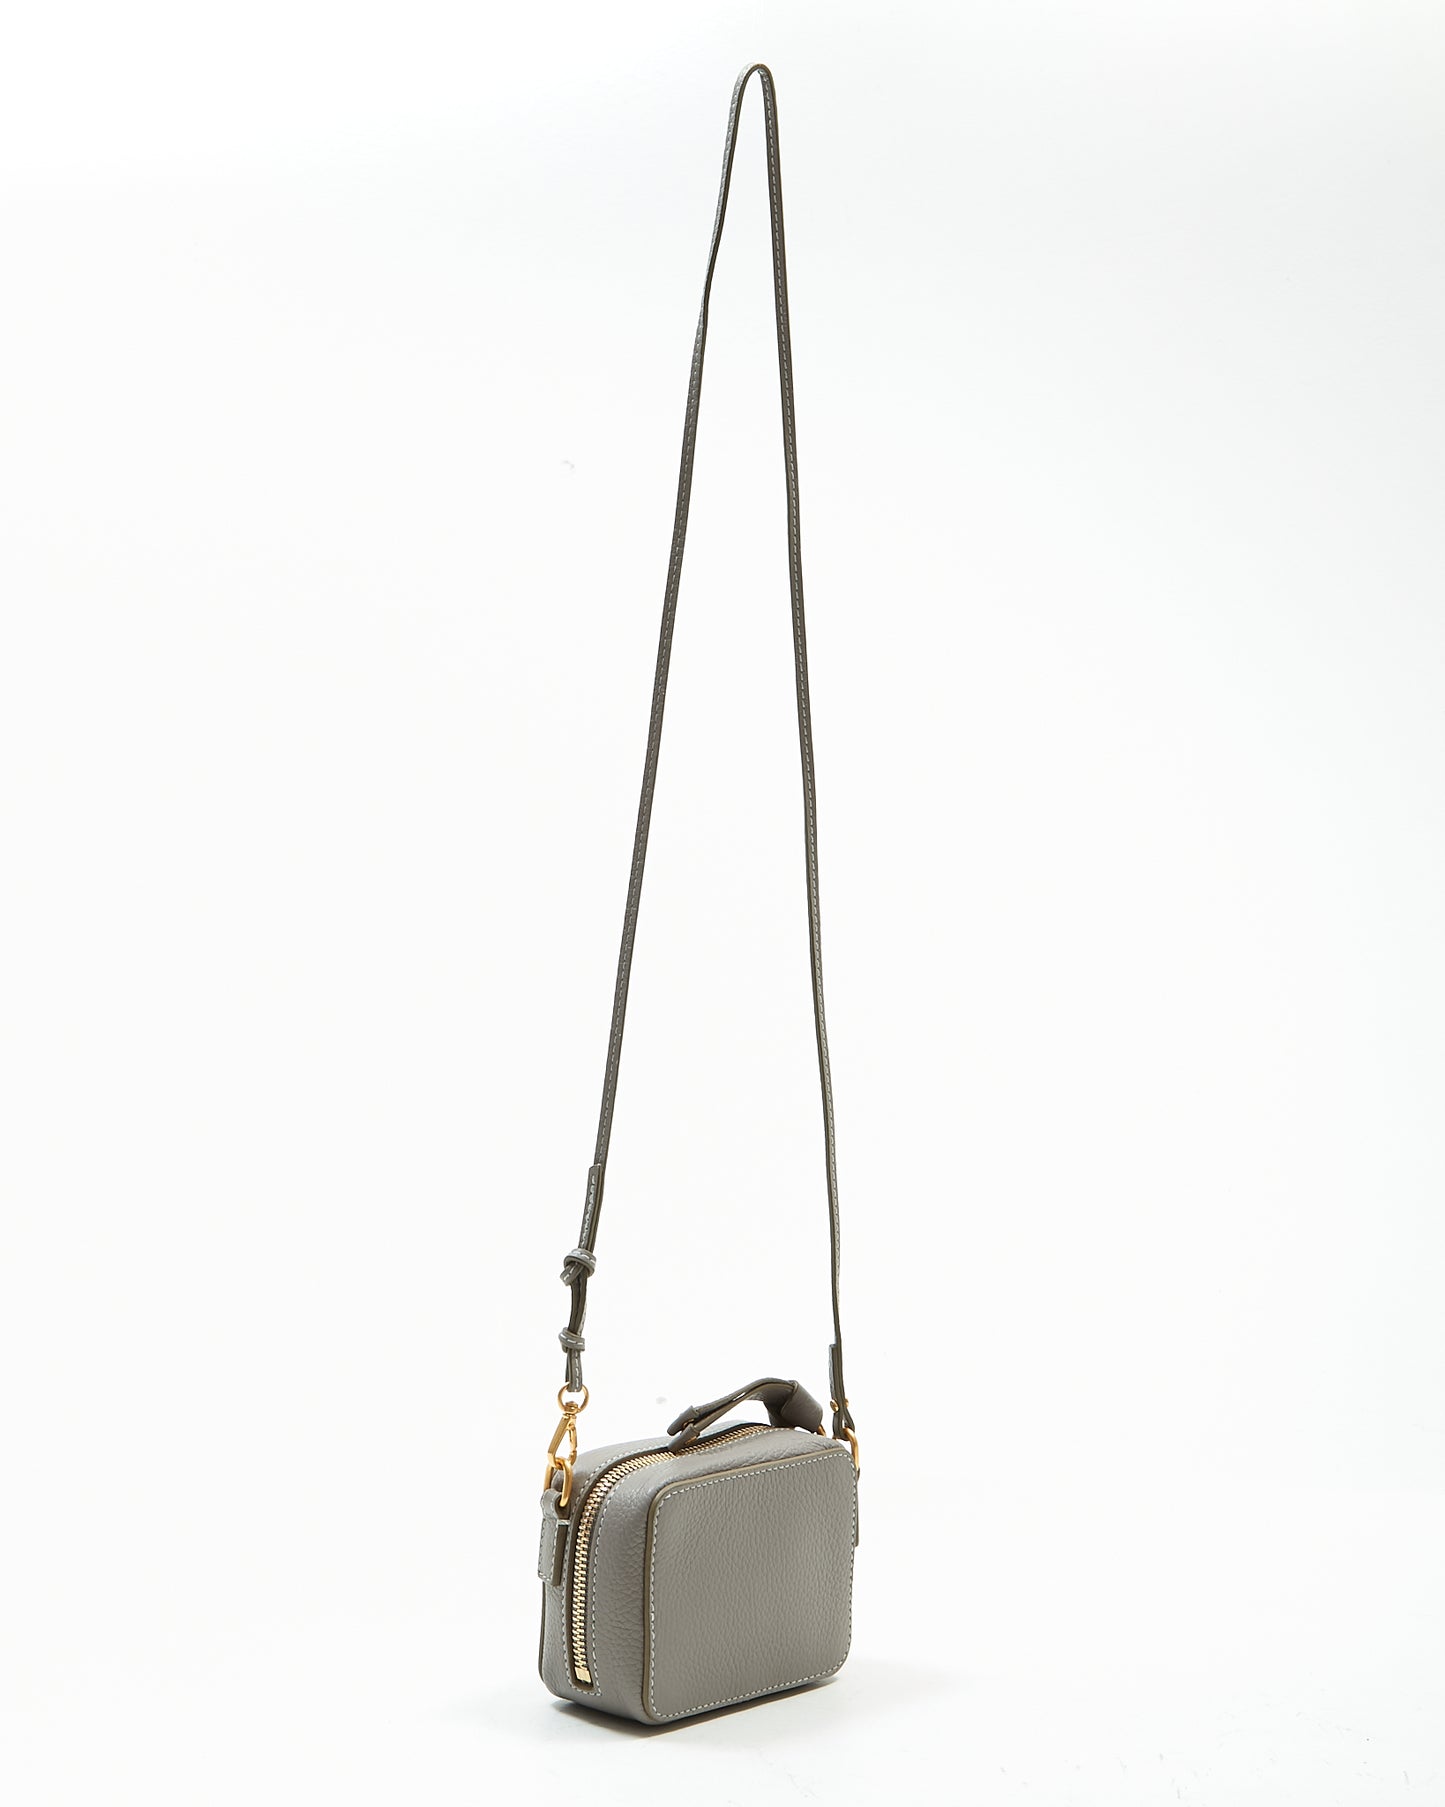 Chloe Cashmere Grey Leather Mini Shoulder Bag